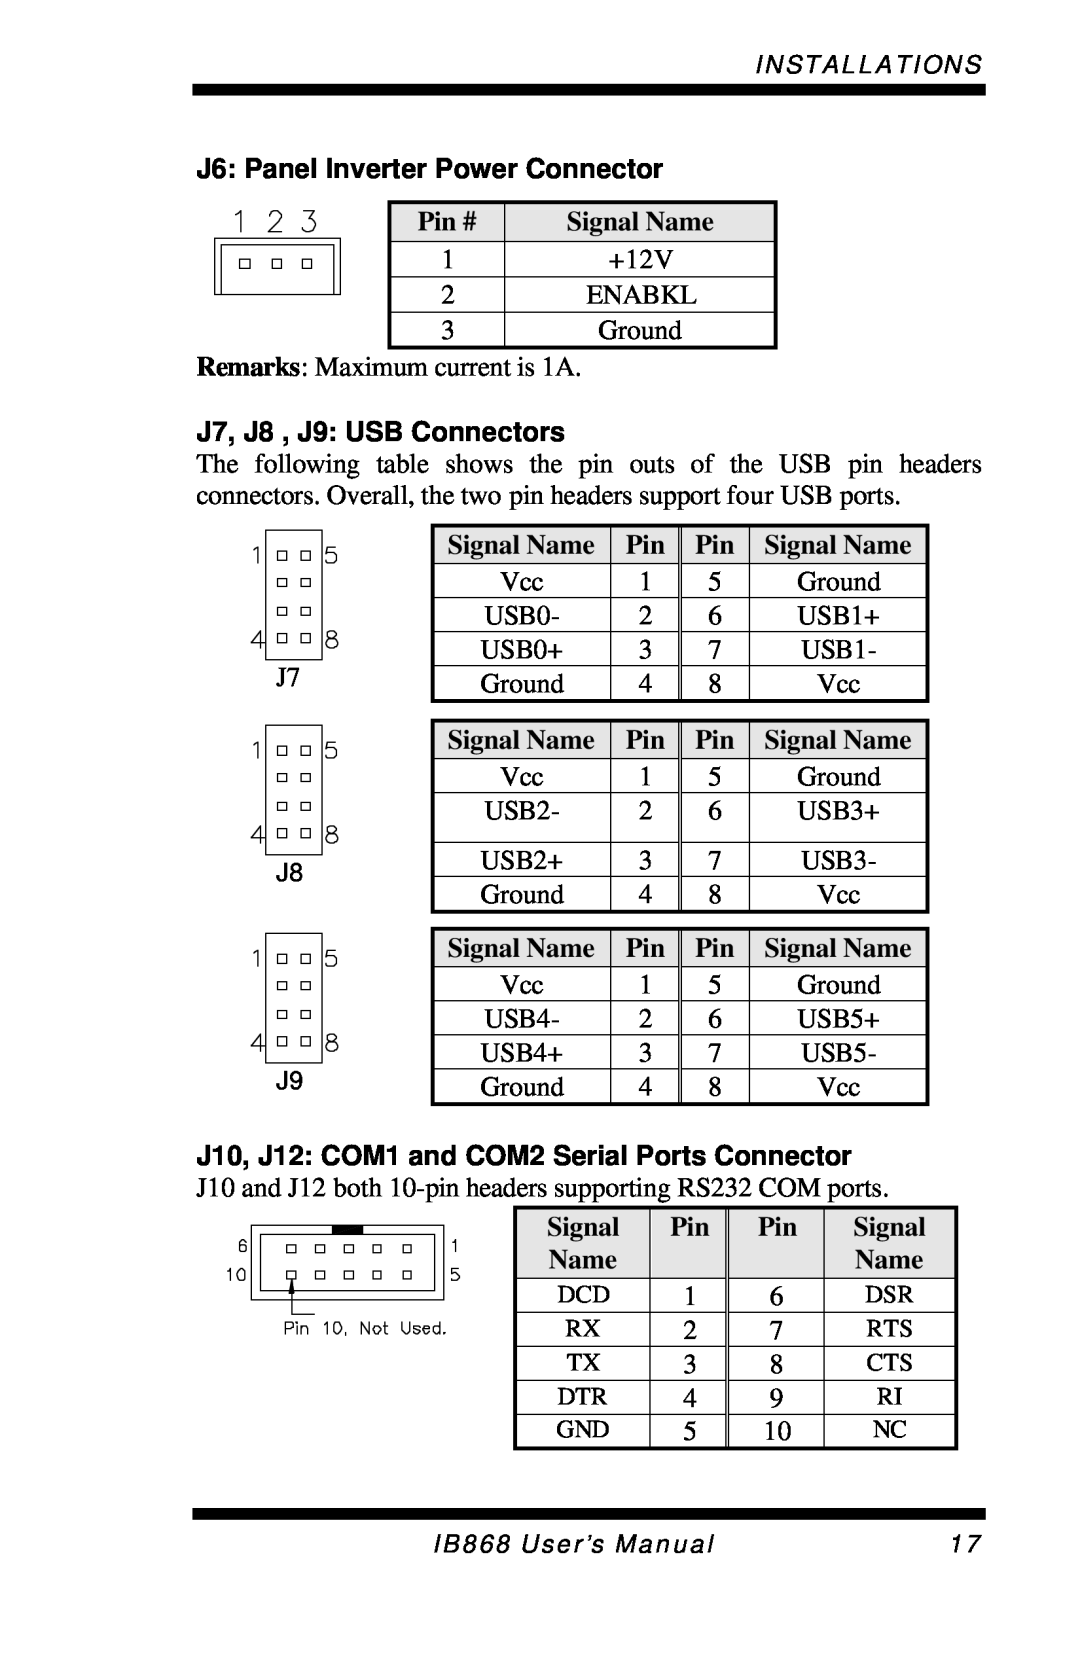 Intel IB868 user manual J6: Panel Inverter Power Connector, J7, J8 , J9: USB Connectors 